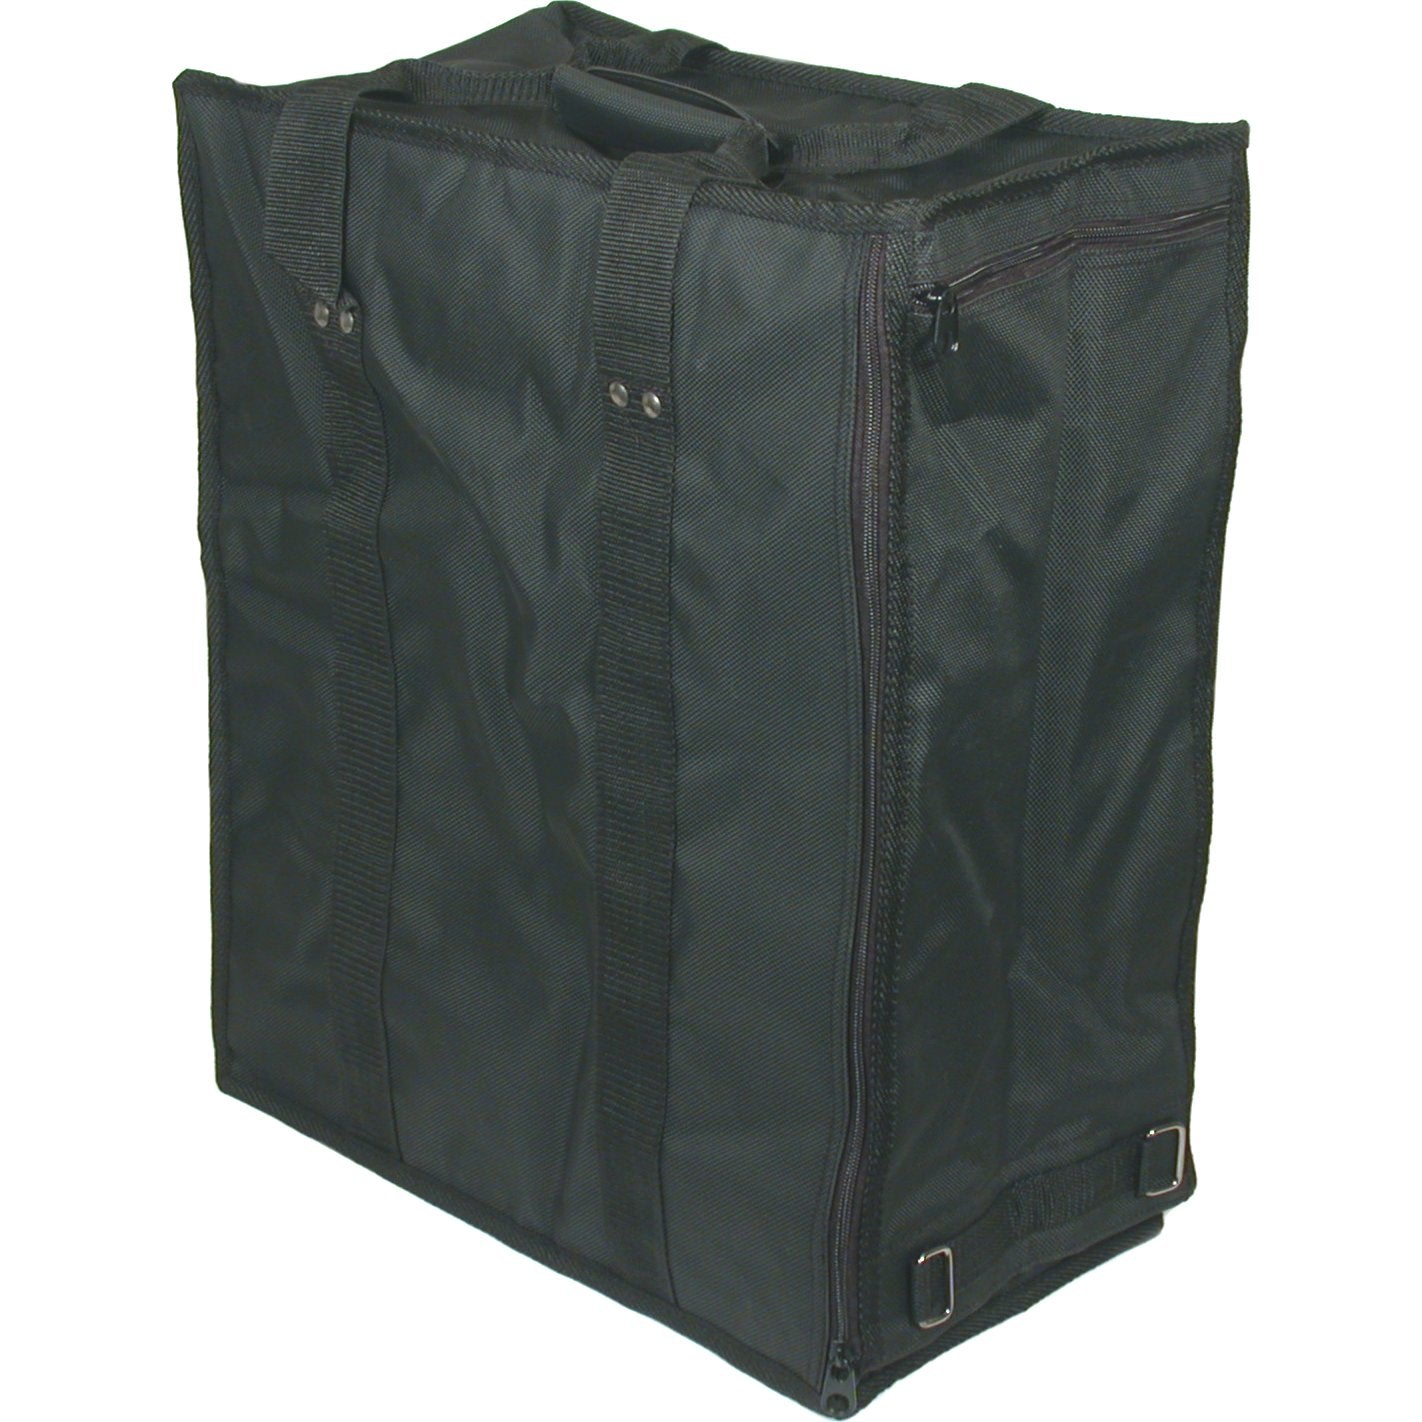 Zipper Carrying Case Black 19"